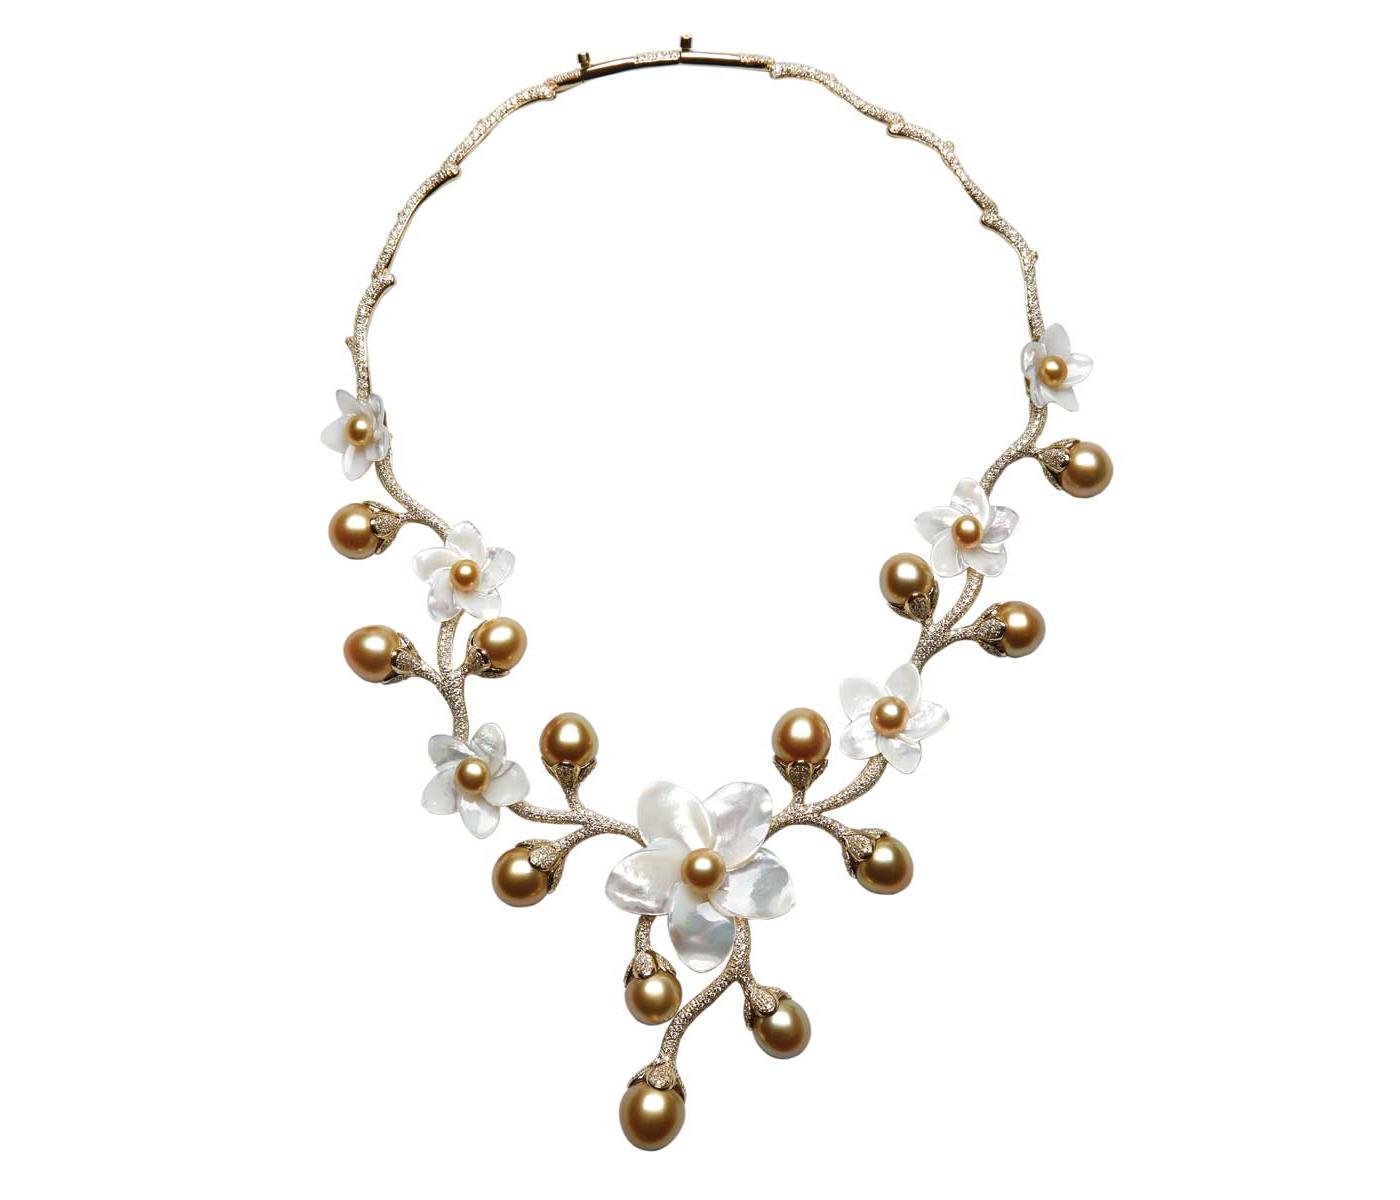 Necklace by Jewelmer